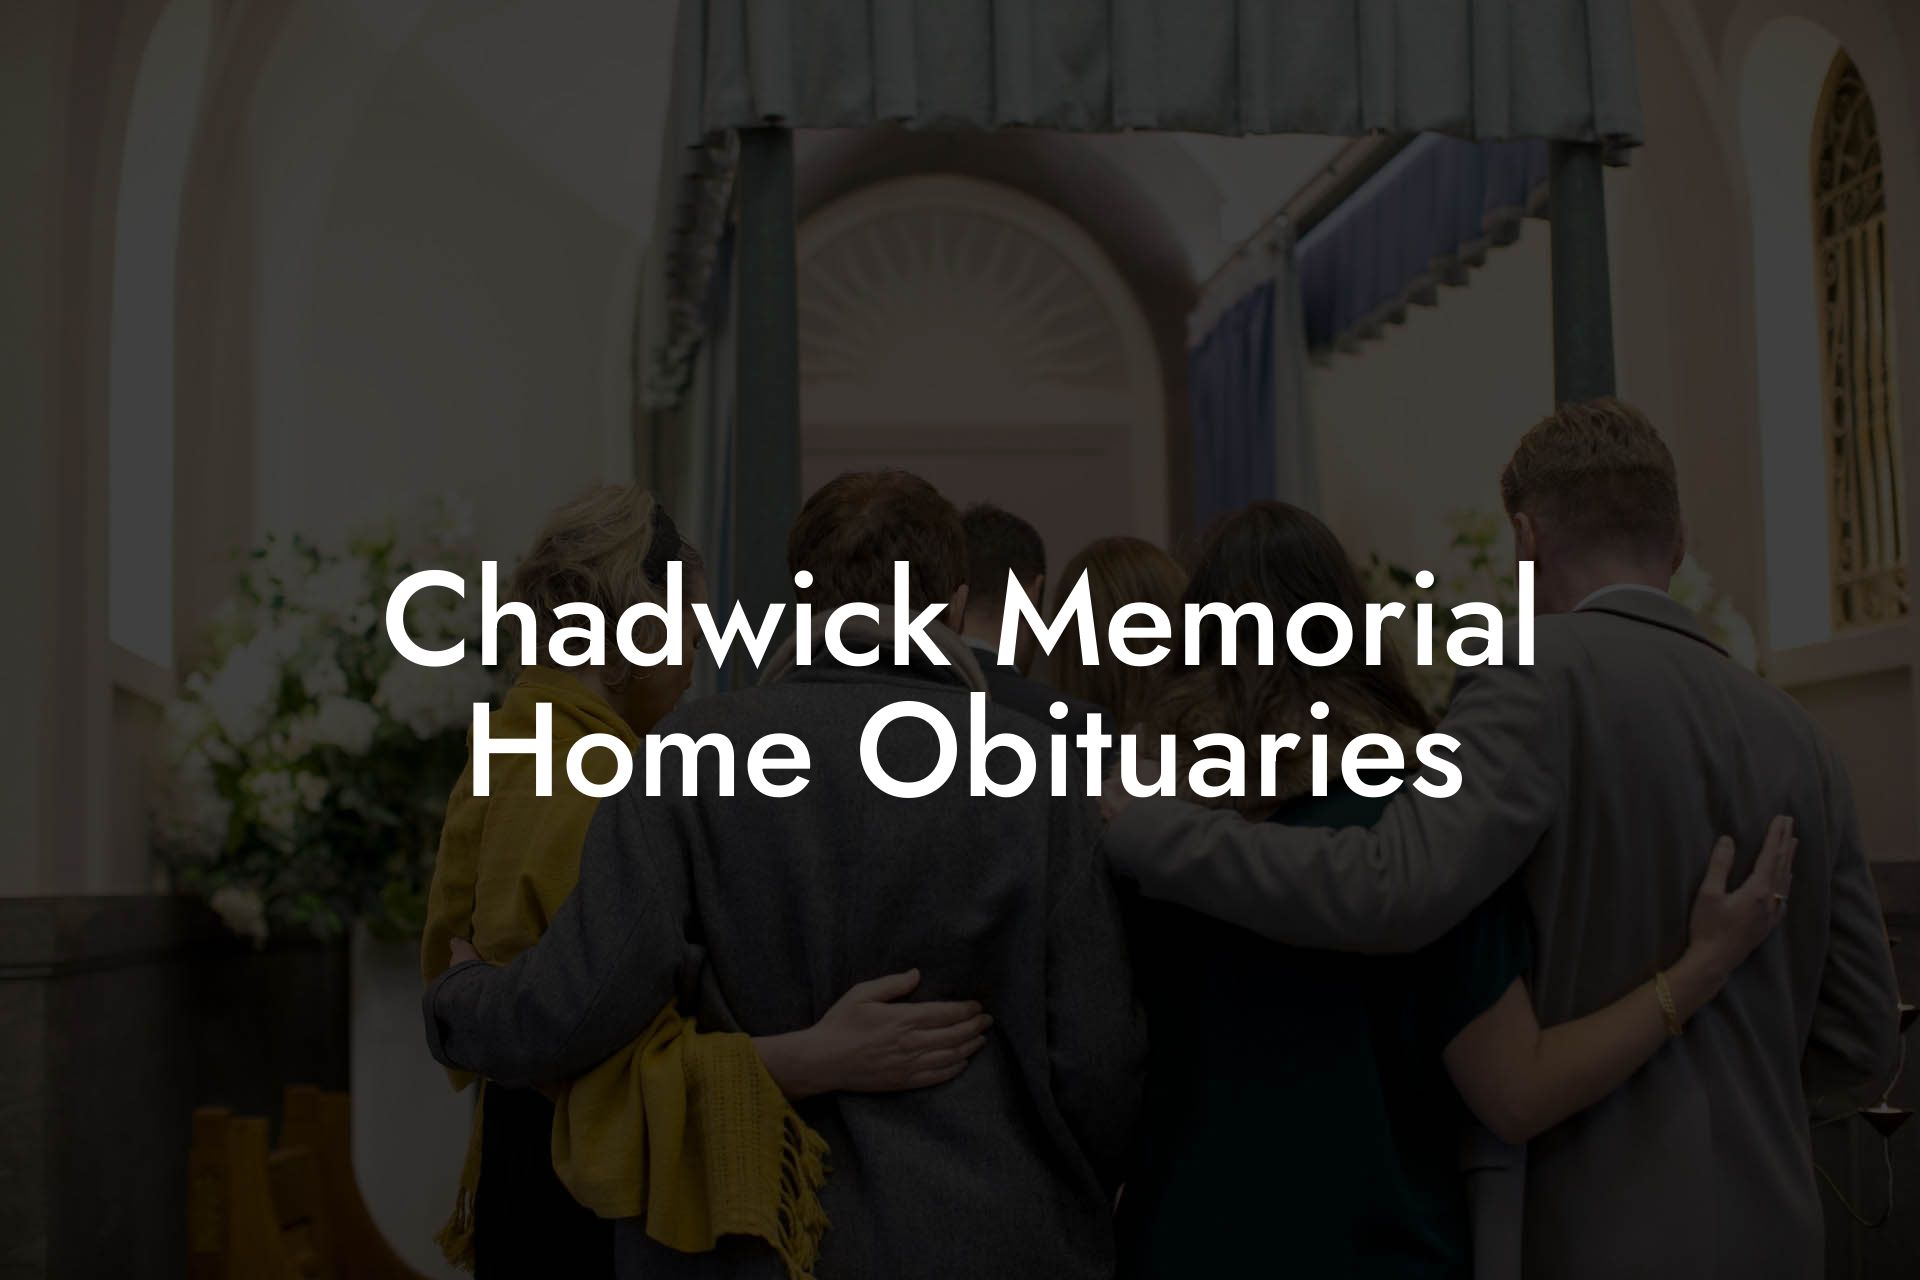 Chadwick Memorial Home Obituaries